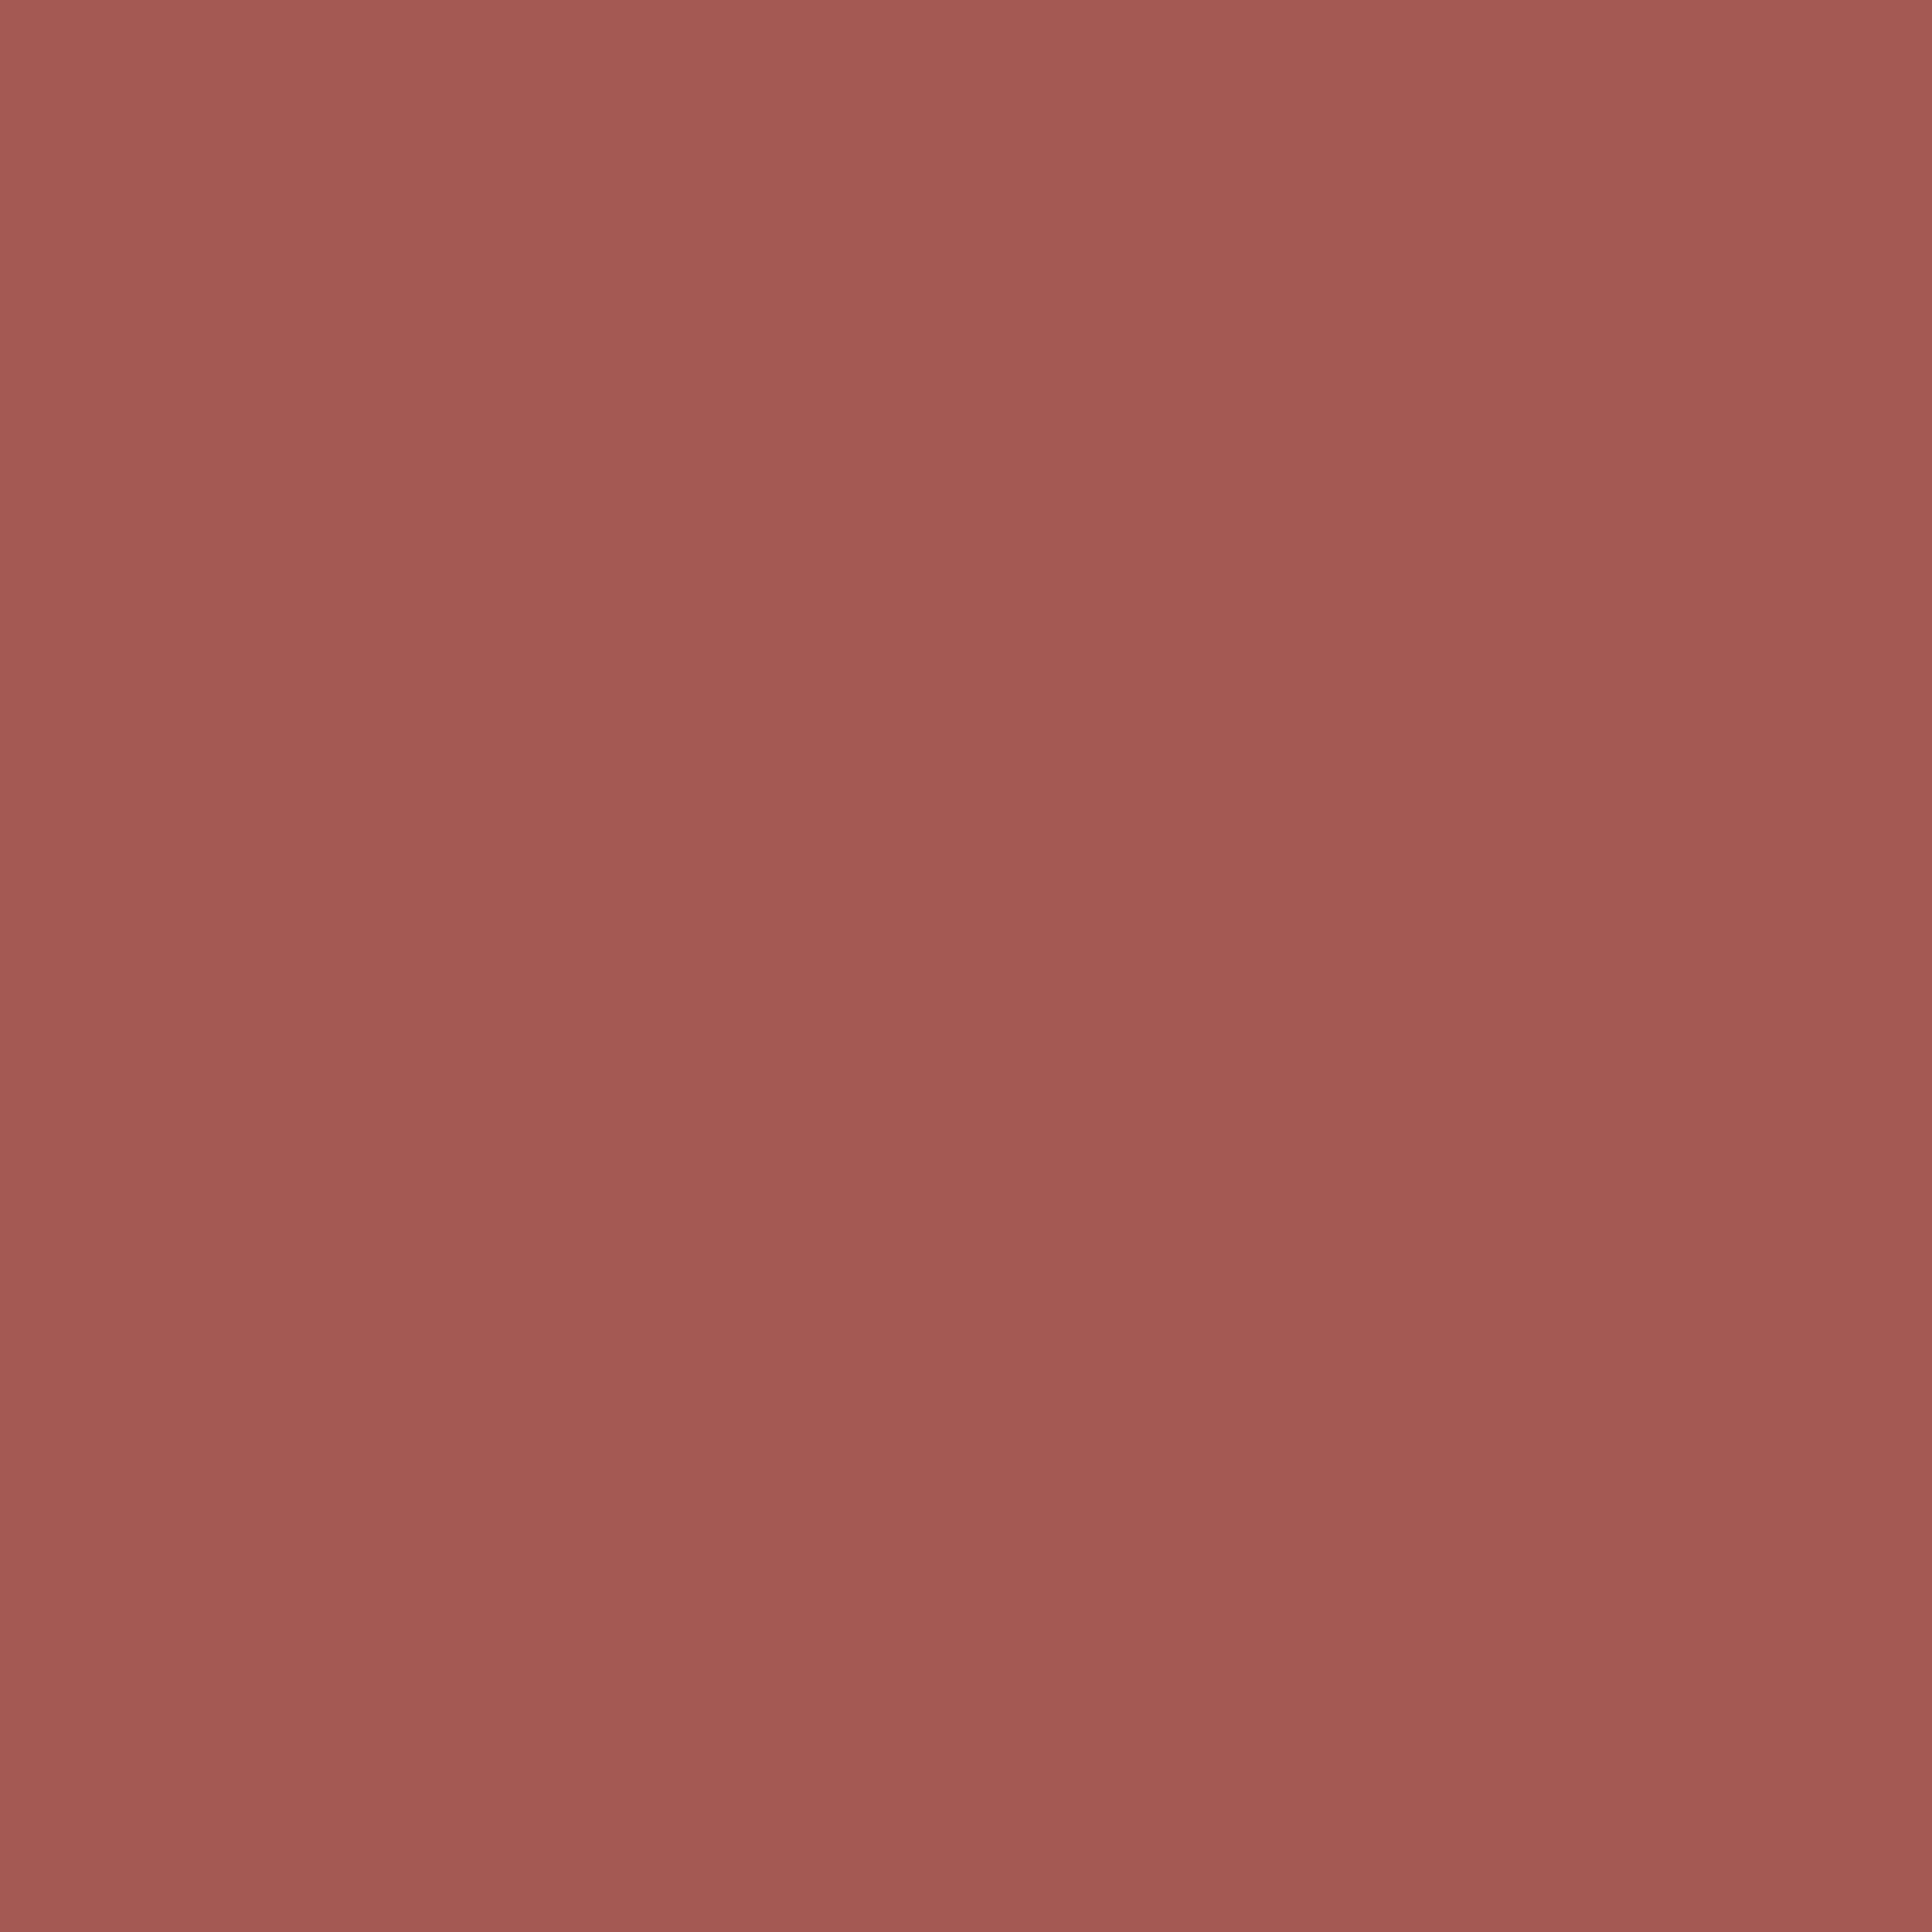 3600x3600 Redwood Solid Color Background